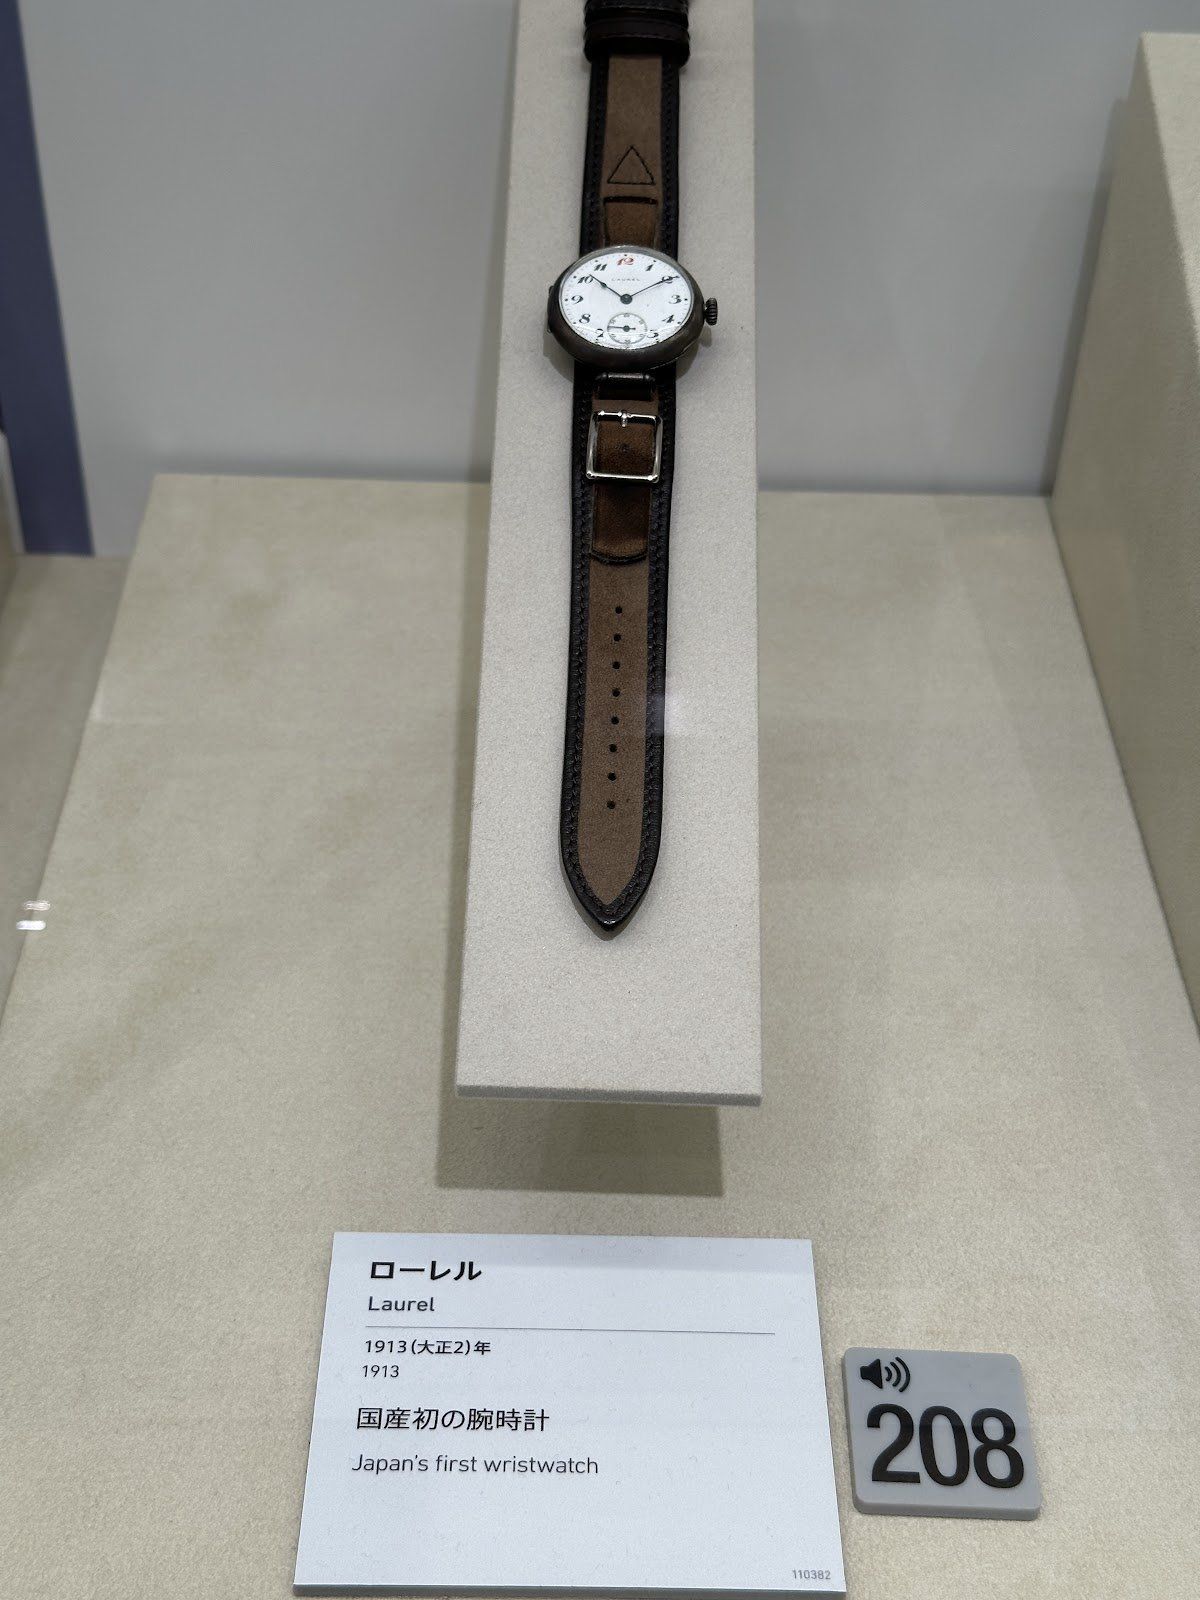 Seiko's first wristwatch in 1913